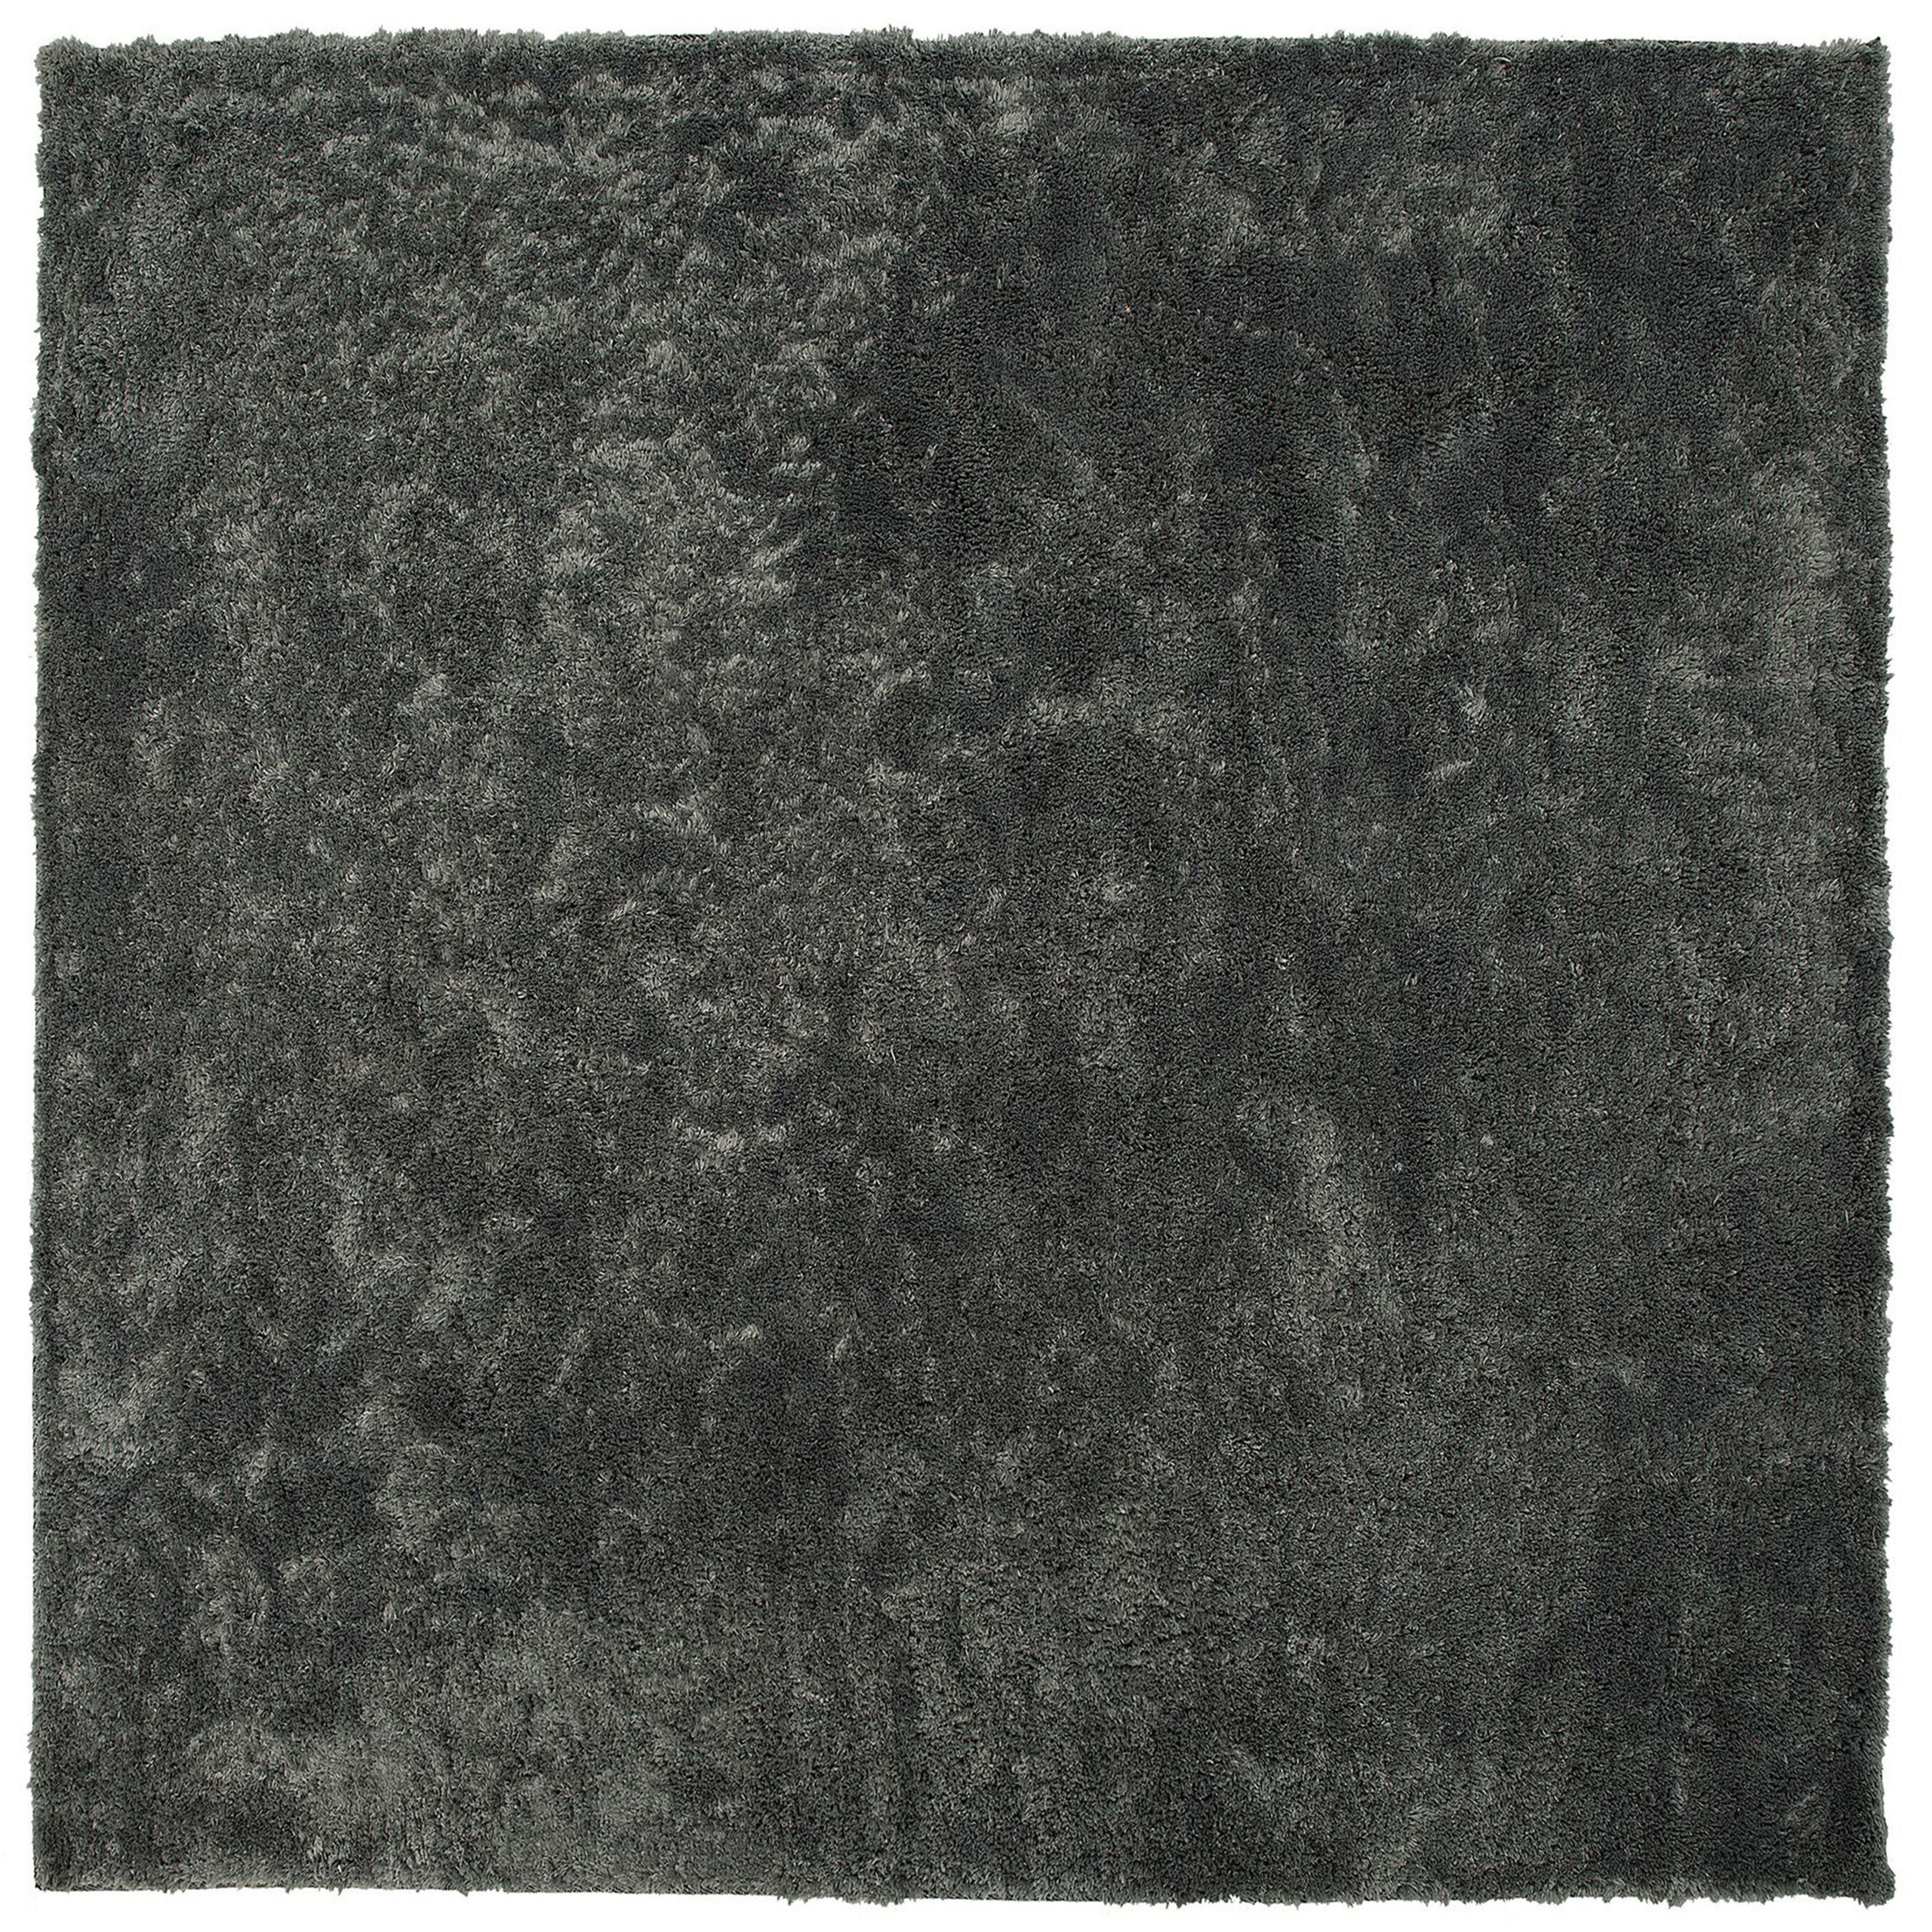 Beliani Shaggy Area Rug Dark Grey Cotton Polyester Blend 200 x 200 cm Fluffy Dense Pile